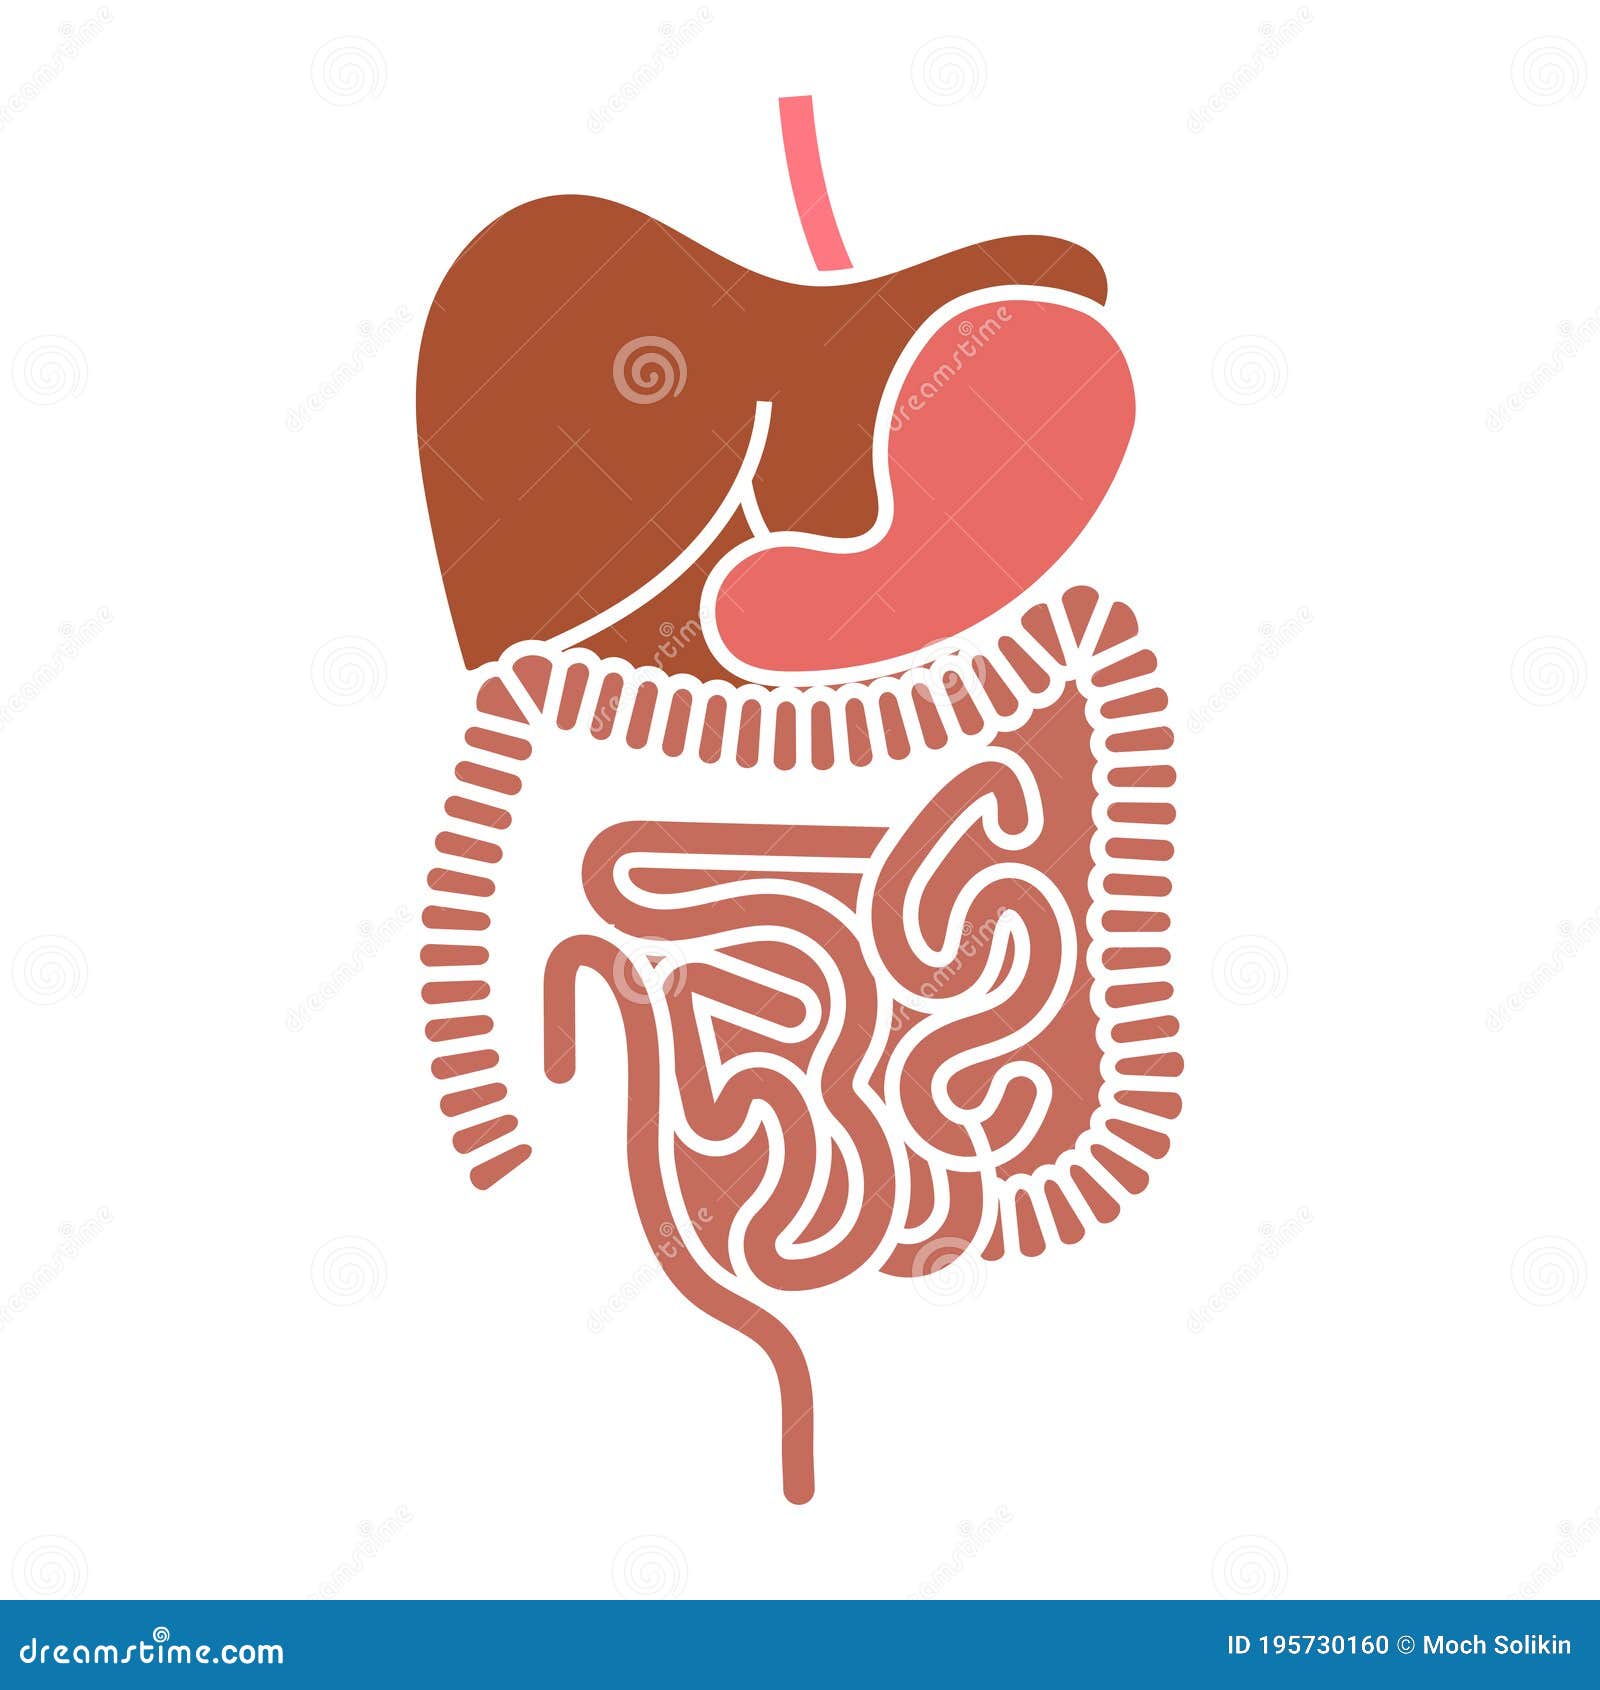 Ruminant digestive system Diagram | Quizlet